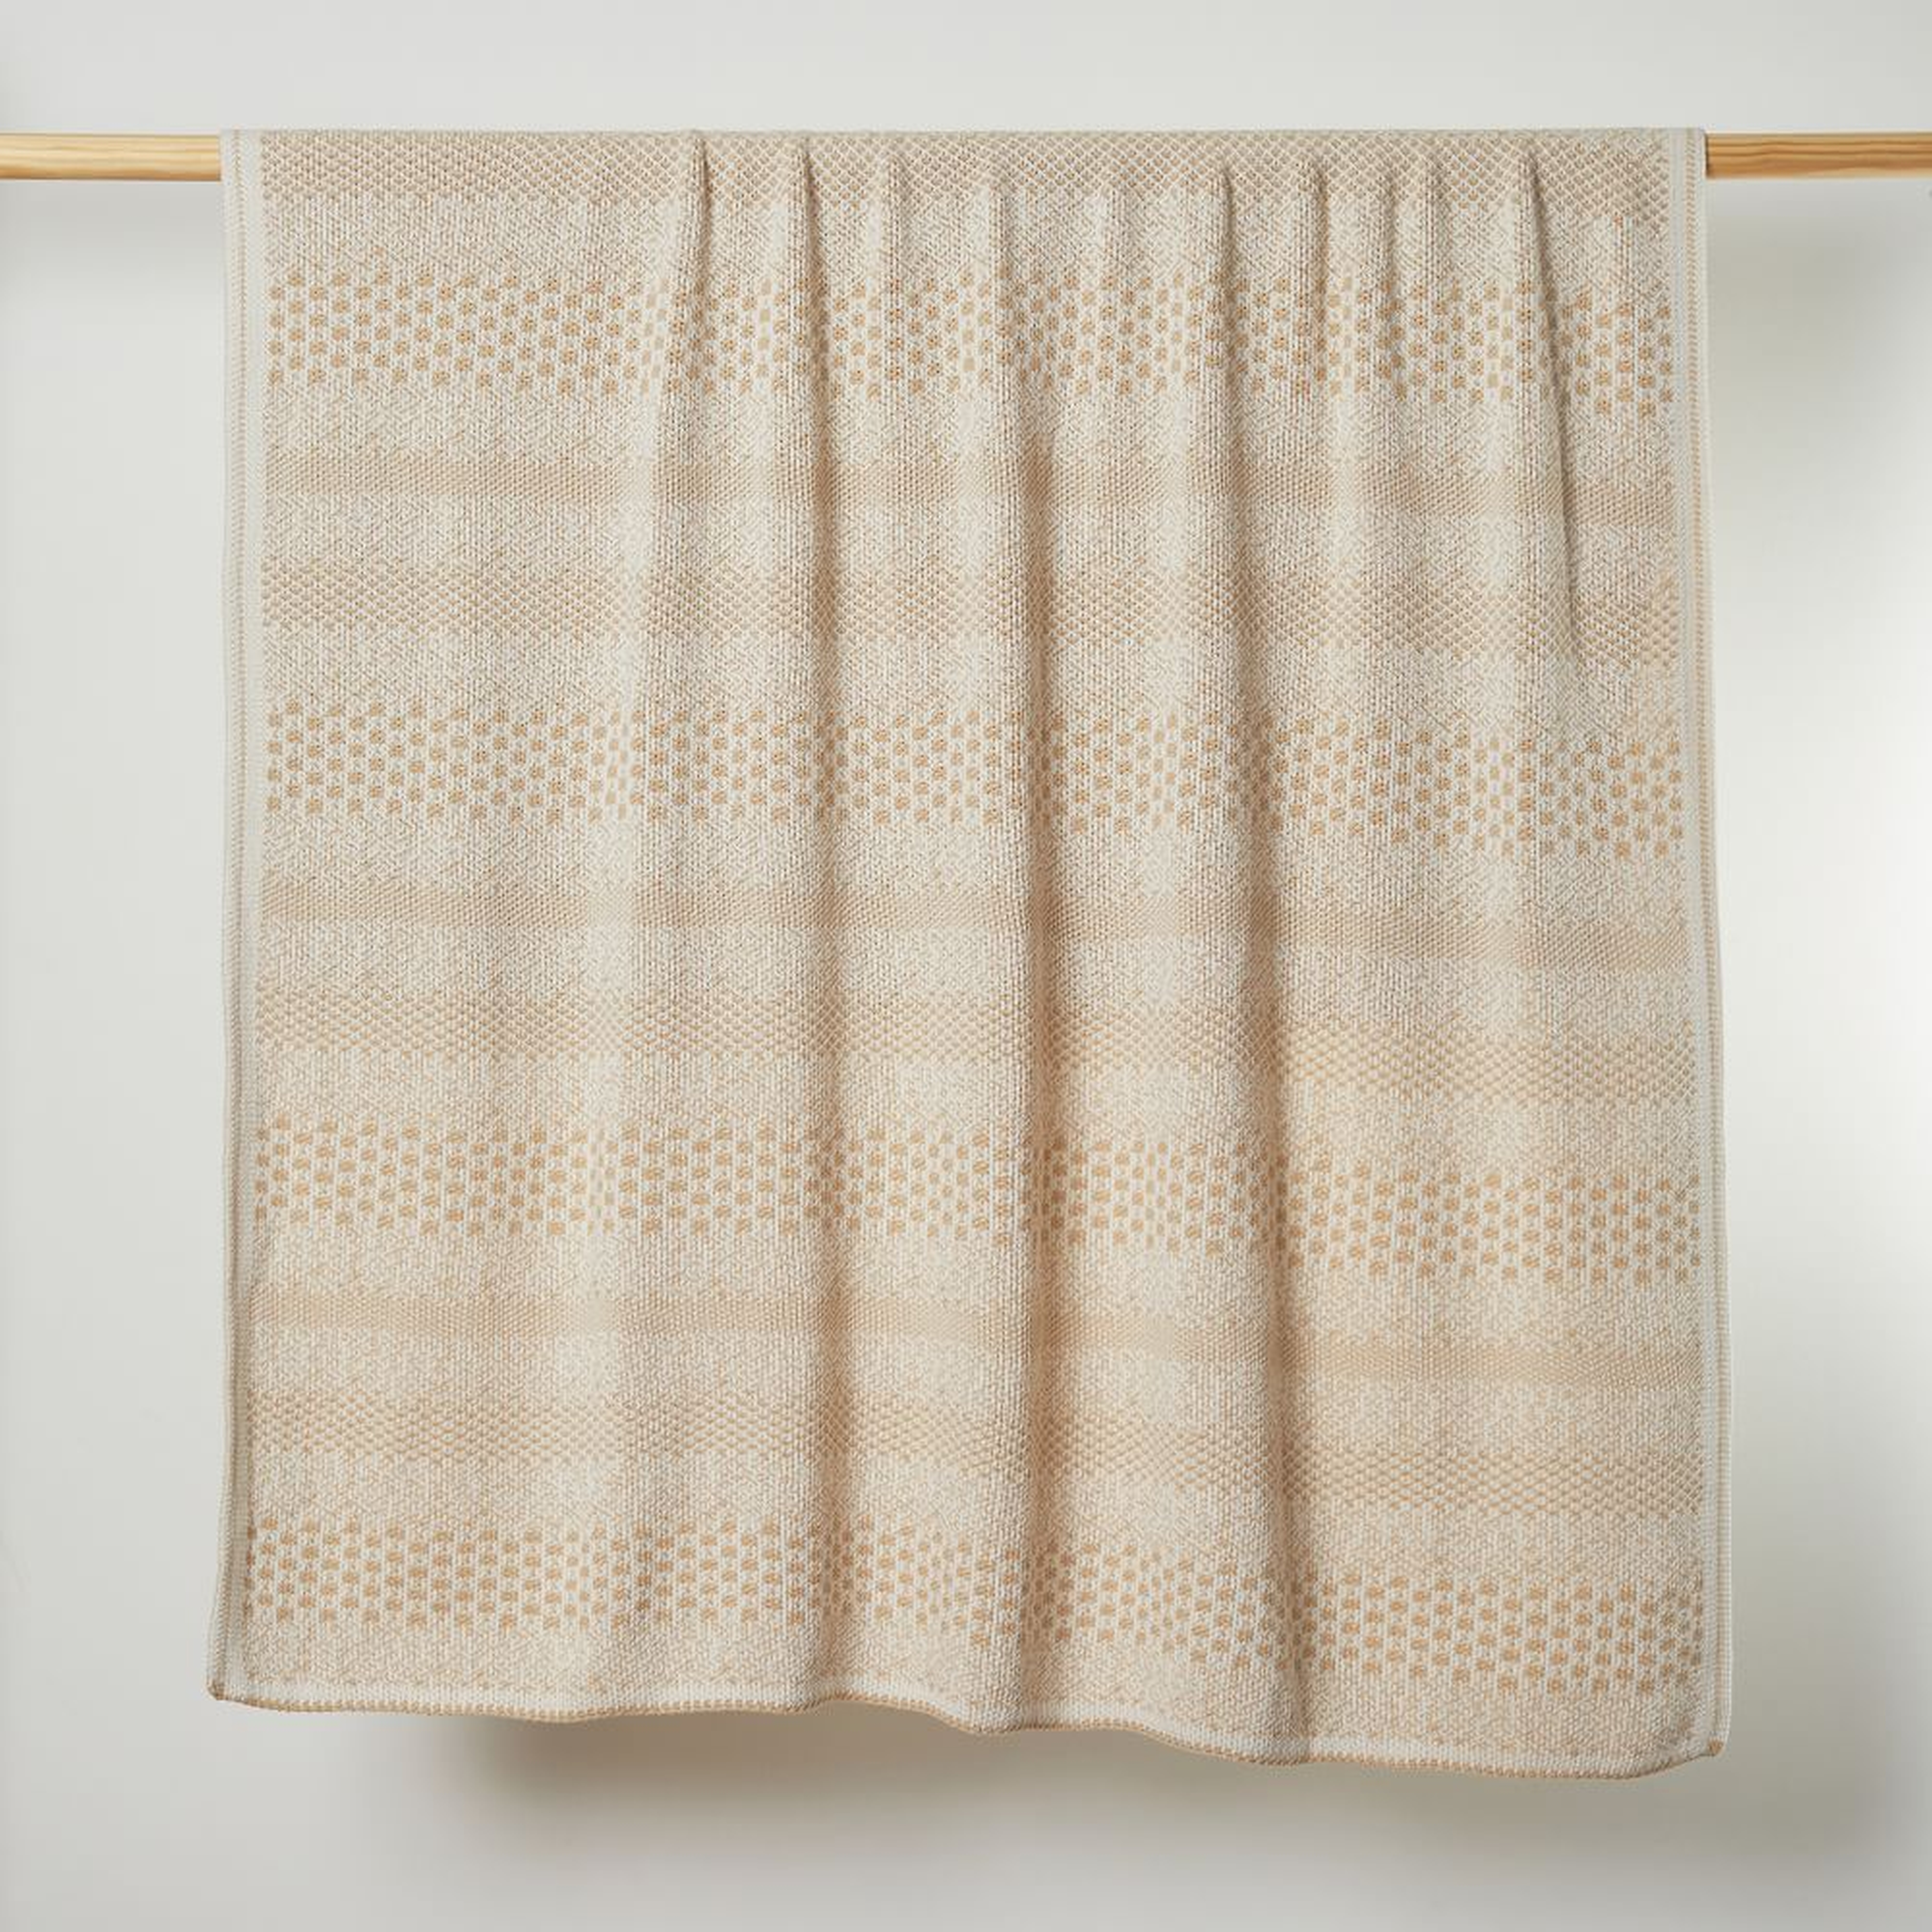 Pixels Throw Blanket Cotton Natural/Tan 60X50 - West Elm